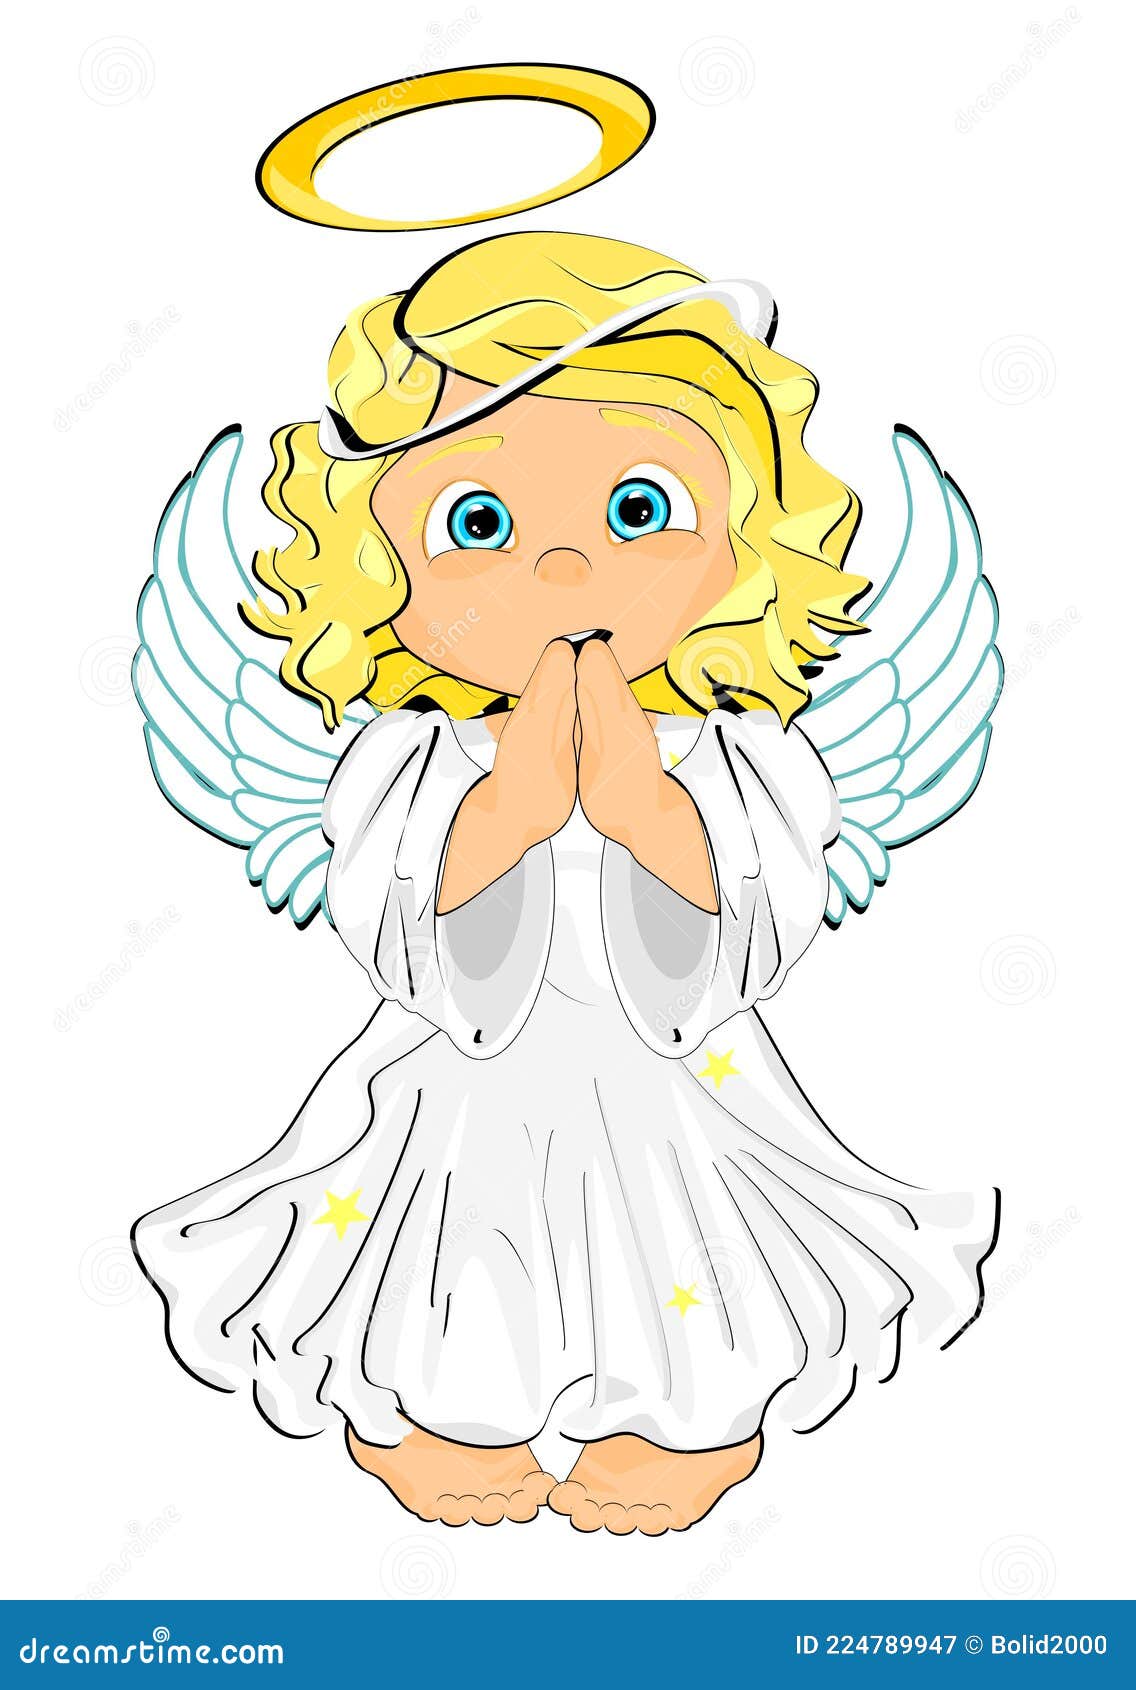 Cute angel cartoon stock illustration. Illustration of fairy - 224789947